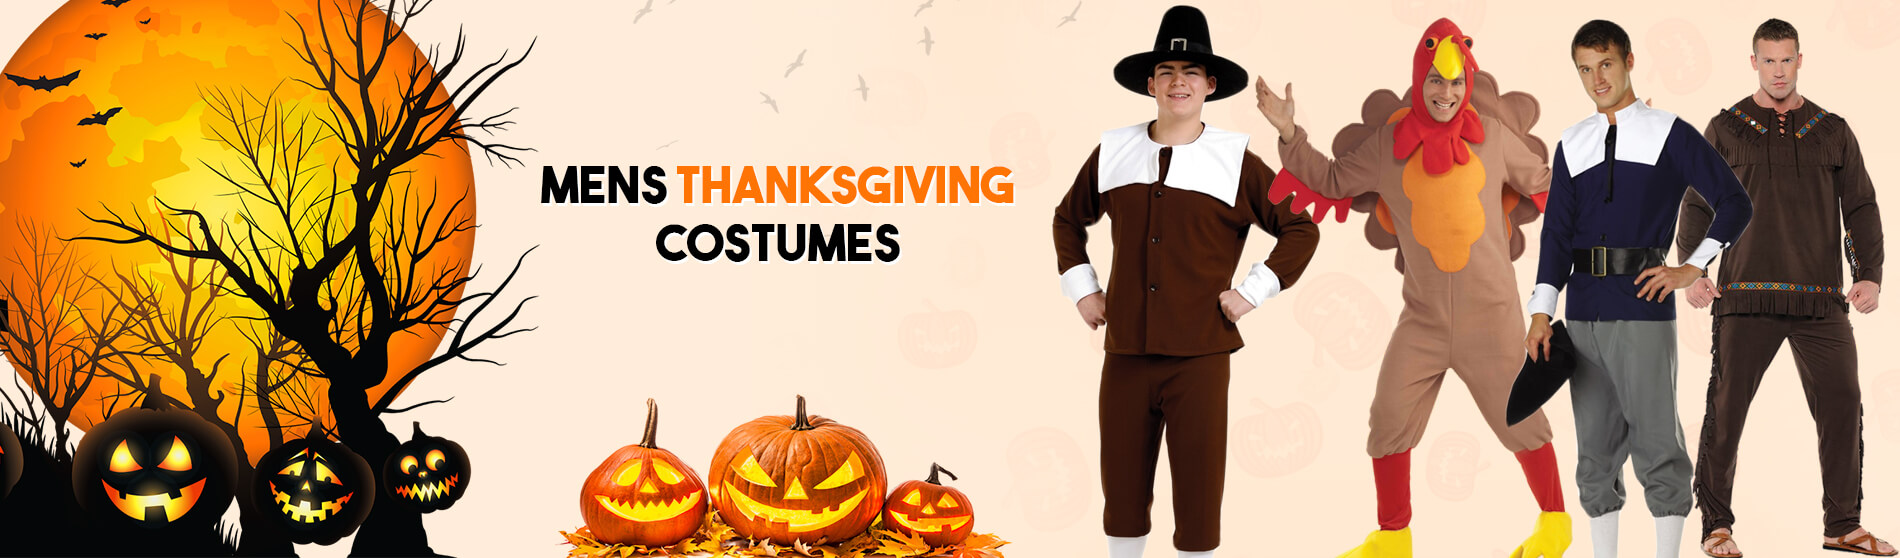 Glendale Halloween : mens-thanksgiving-costumes